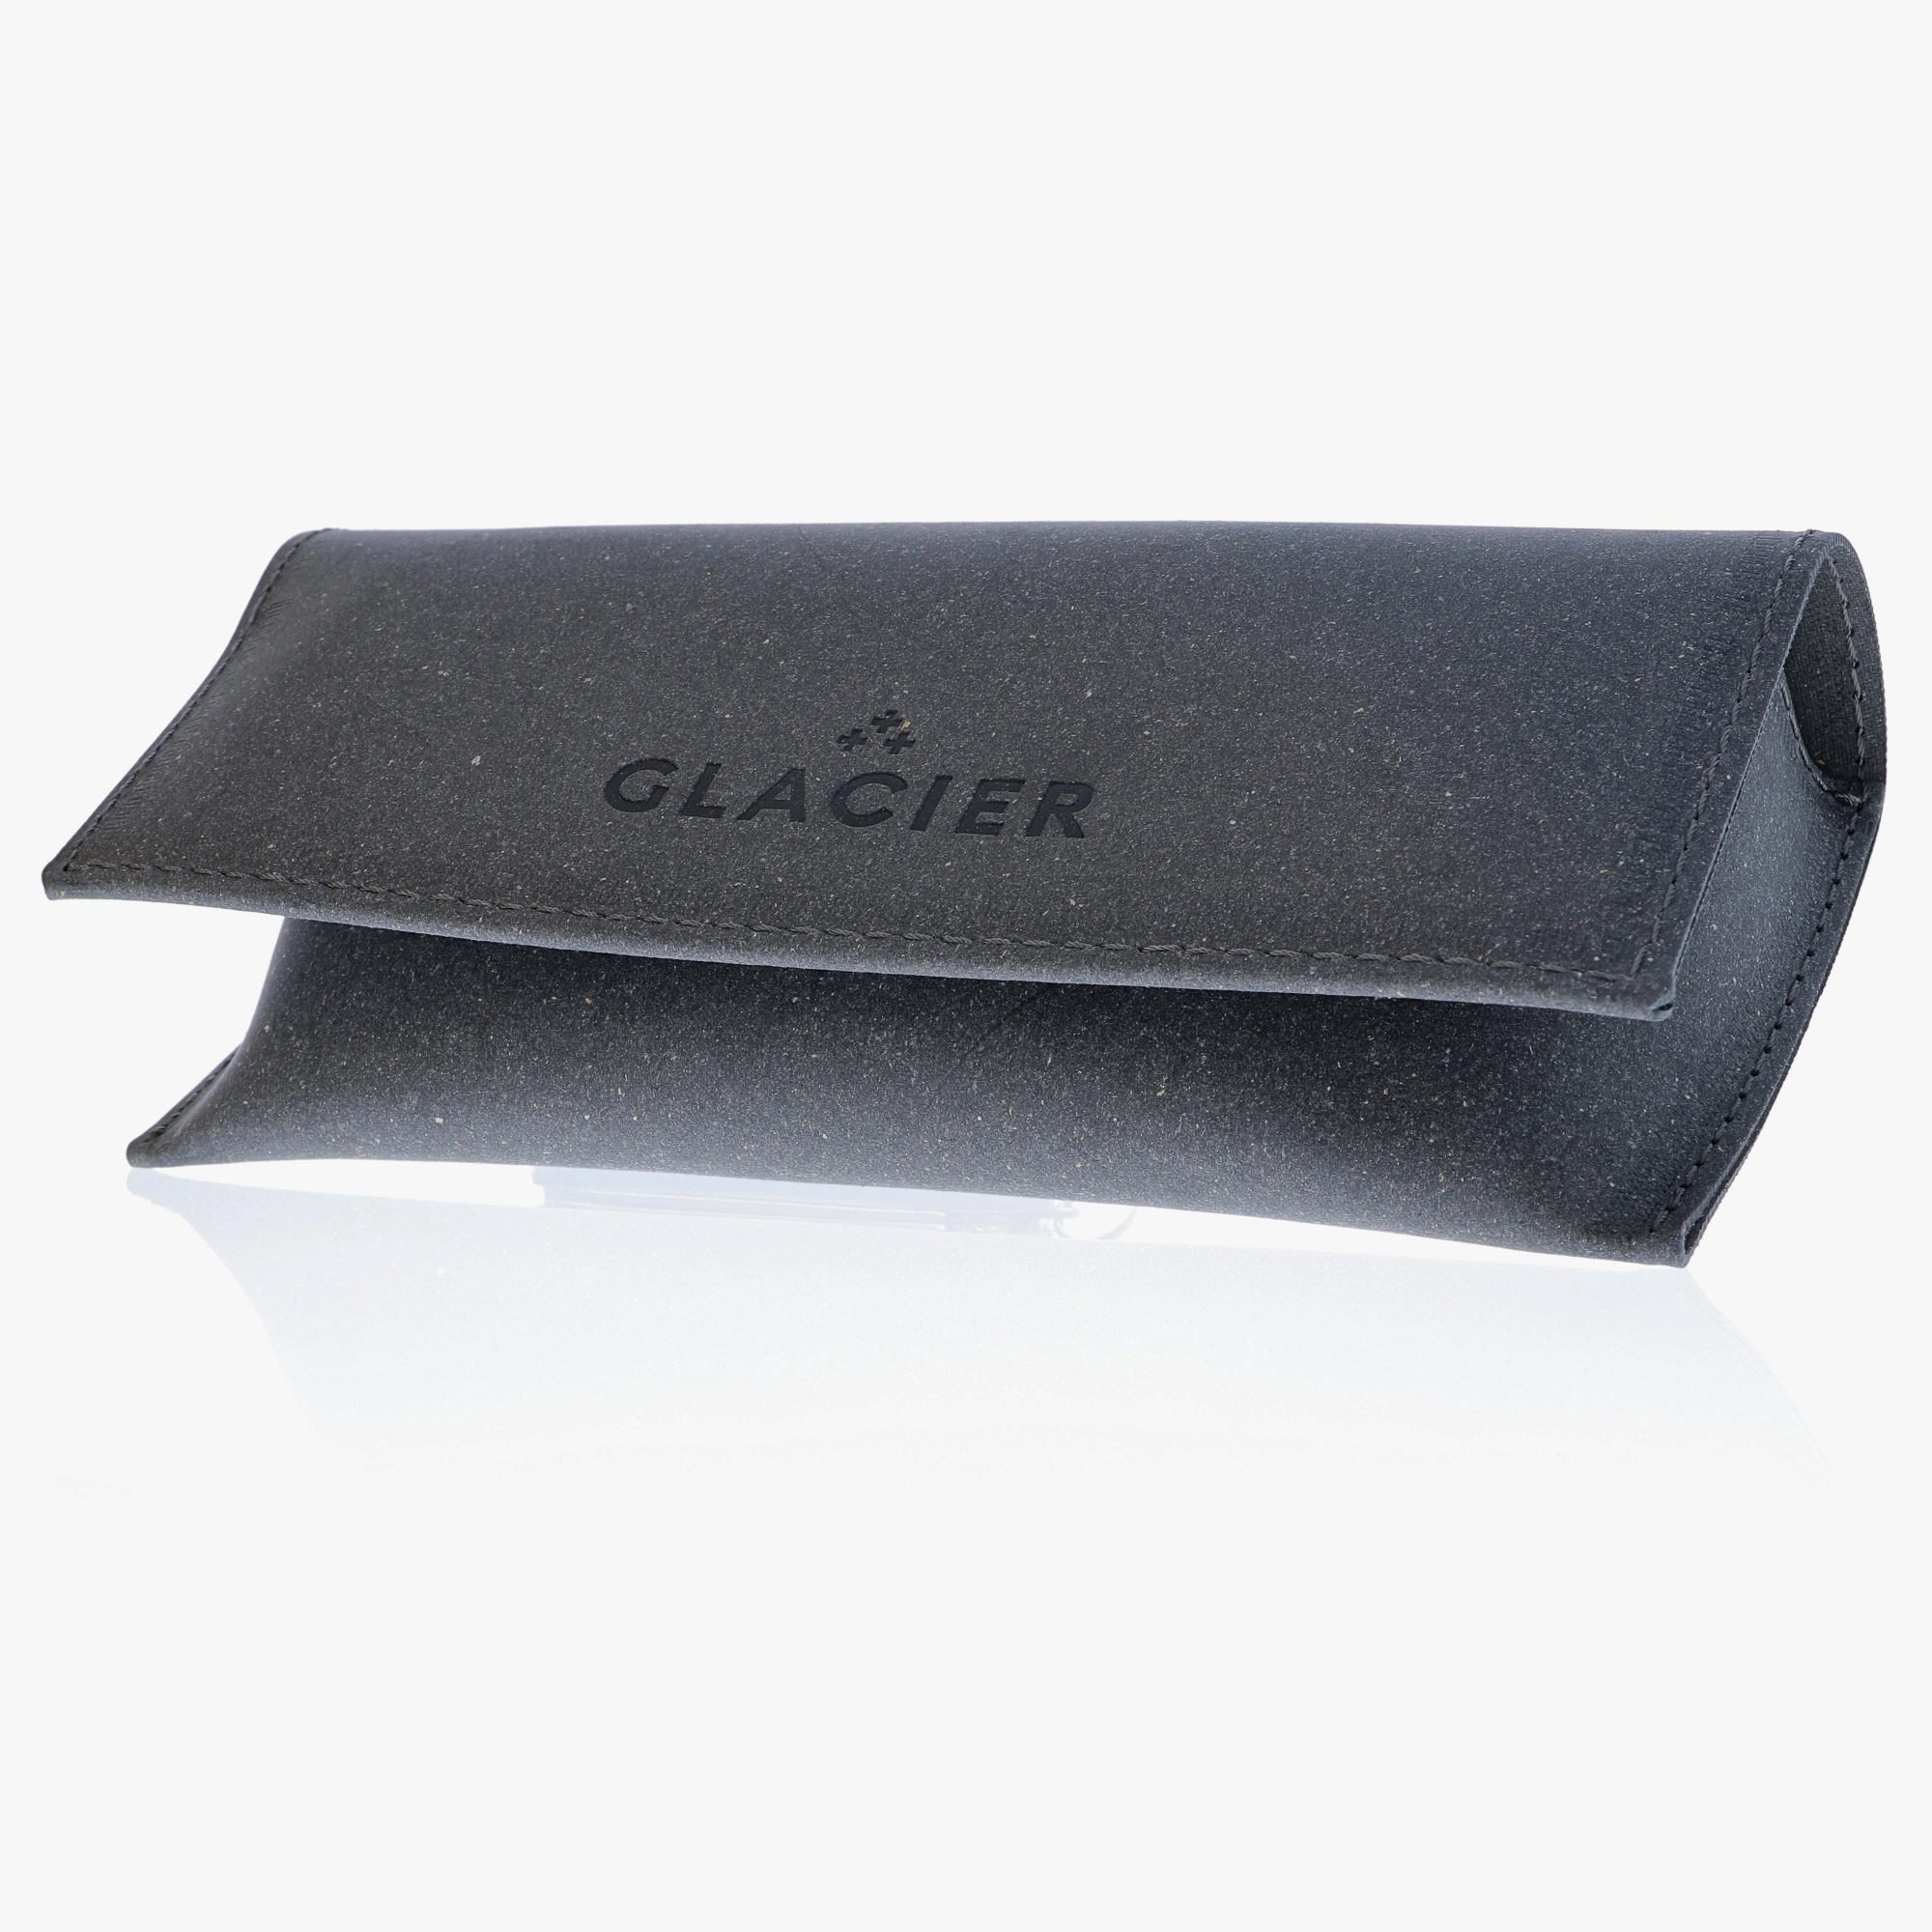 GLACIER OPTICS / MOIRY S / BLACK